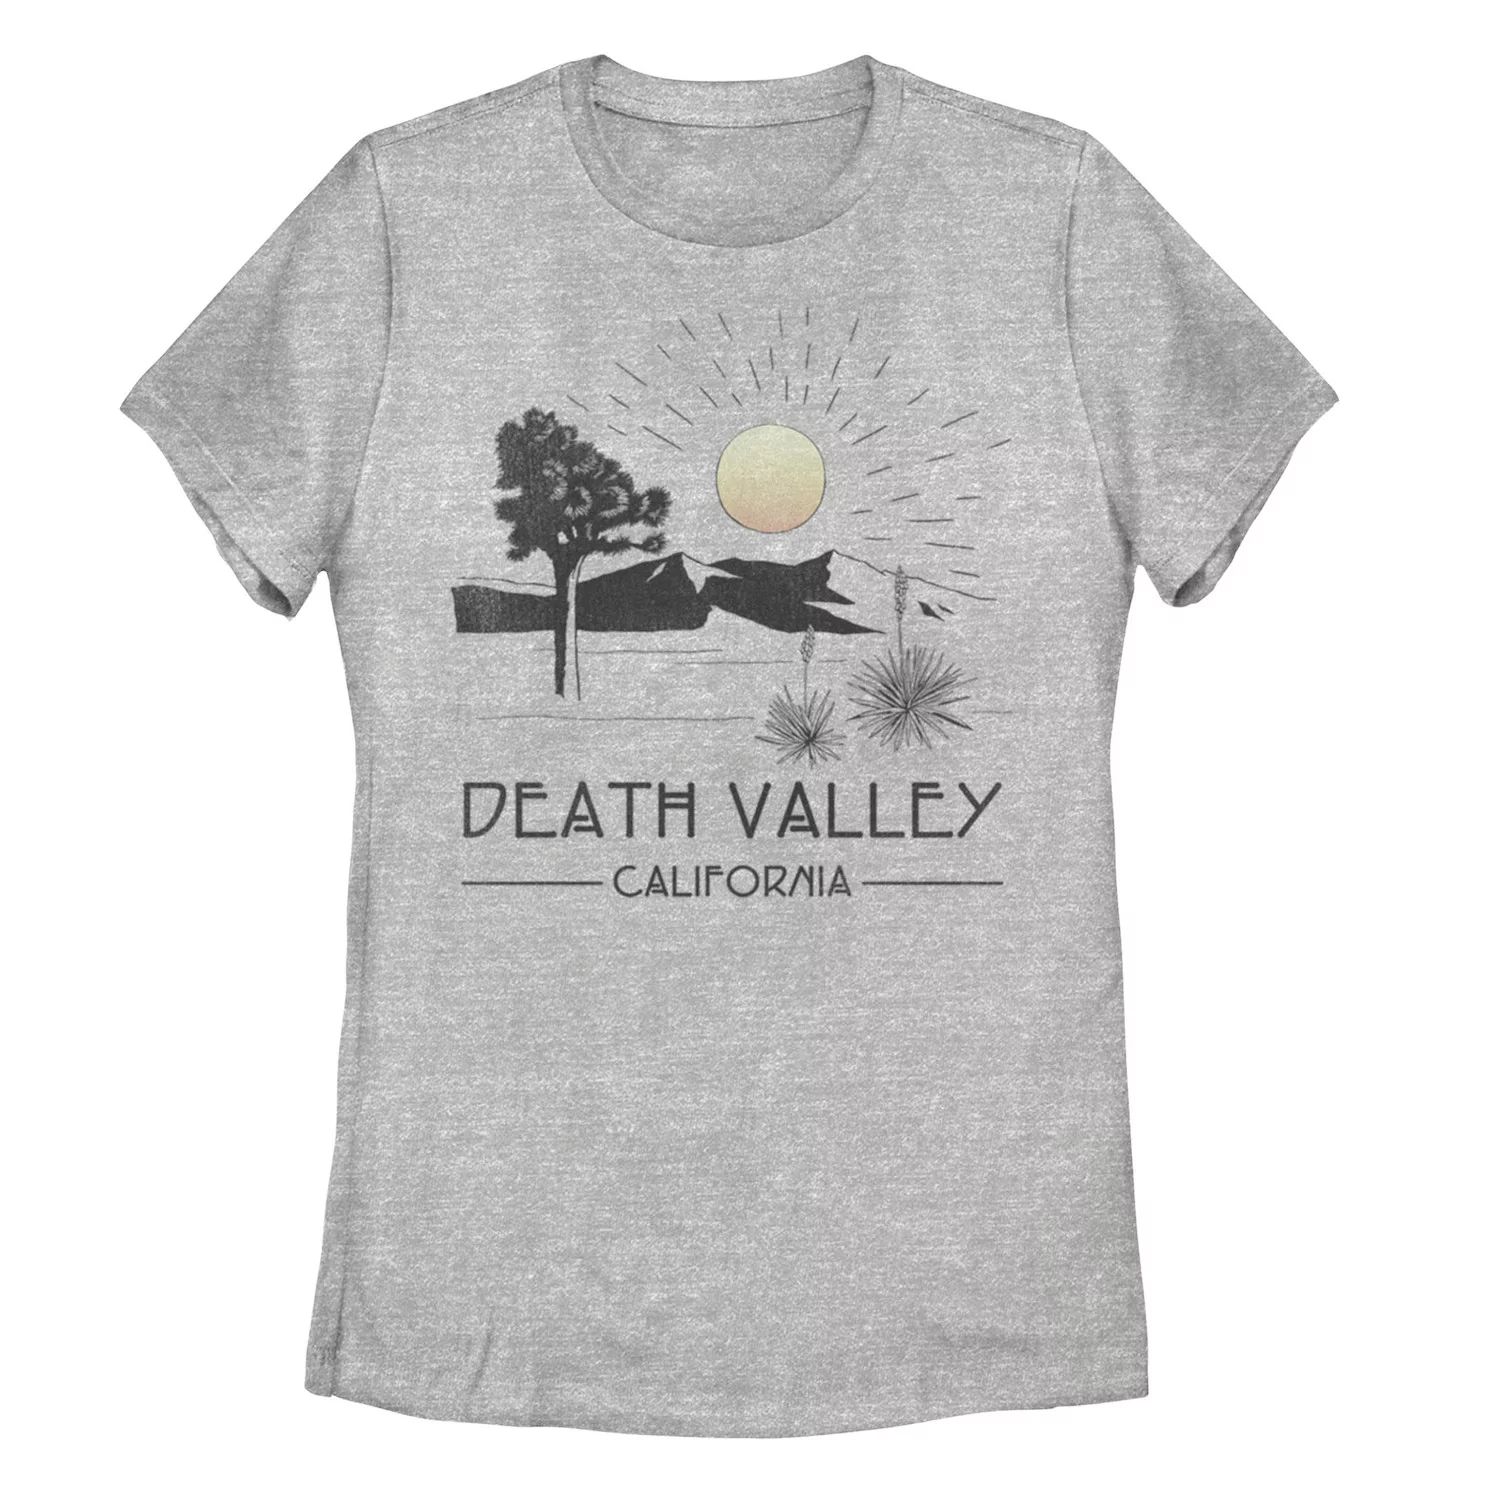 Футболка с логотипом Death Valley California для юниоров Licensed Character death valley national park california retro vintage cactus t shirt